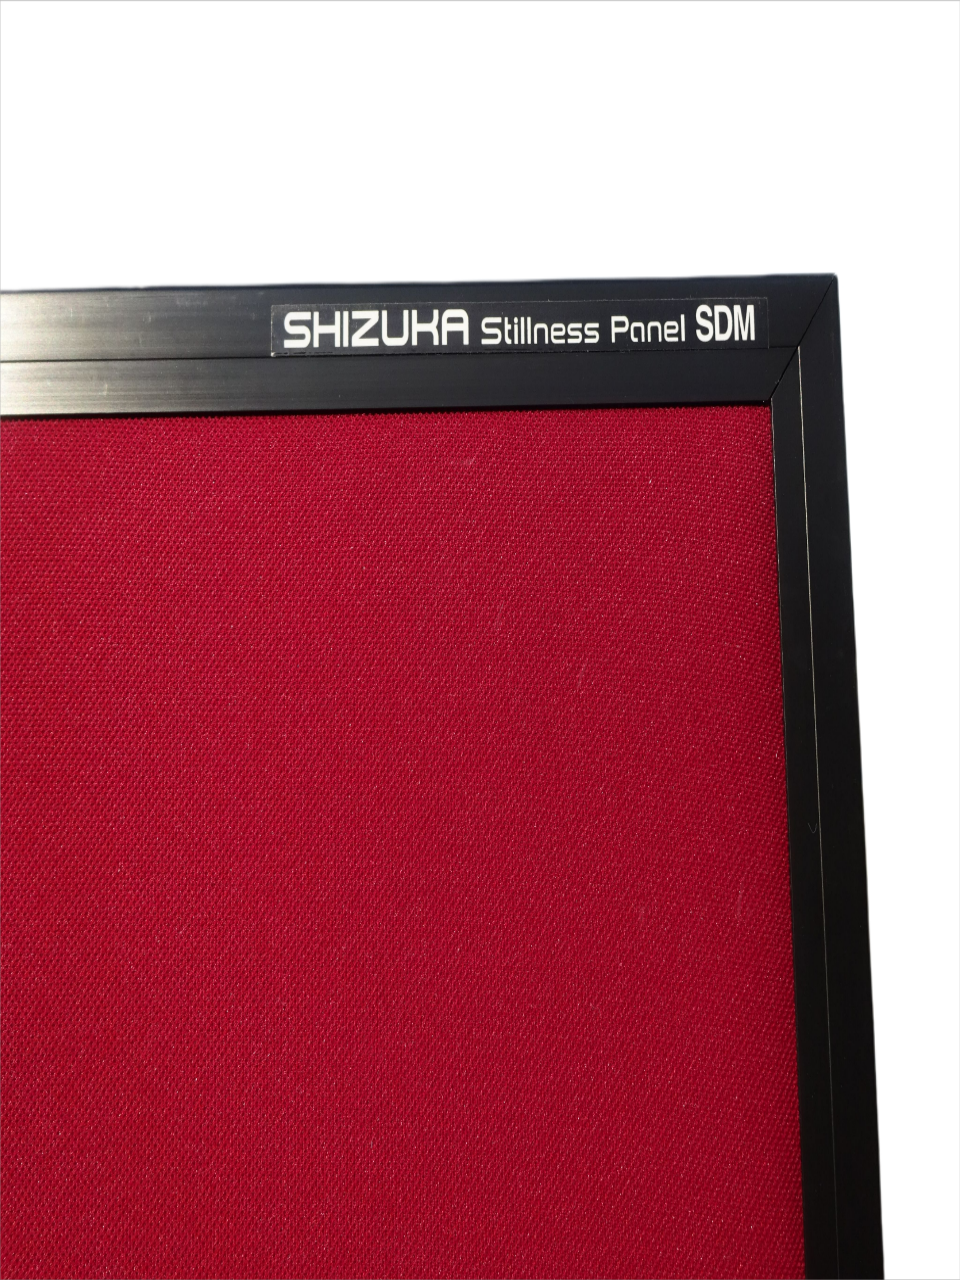 SHIZUKA Stillness Panel SDM-900 (red　高さ900㎜) - サイレント・プロバイダー